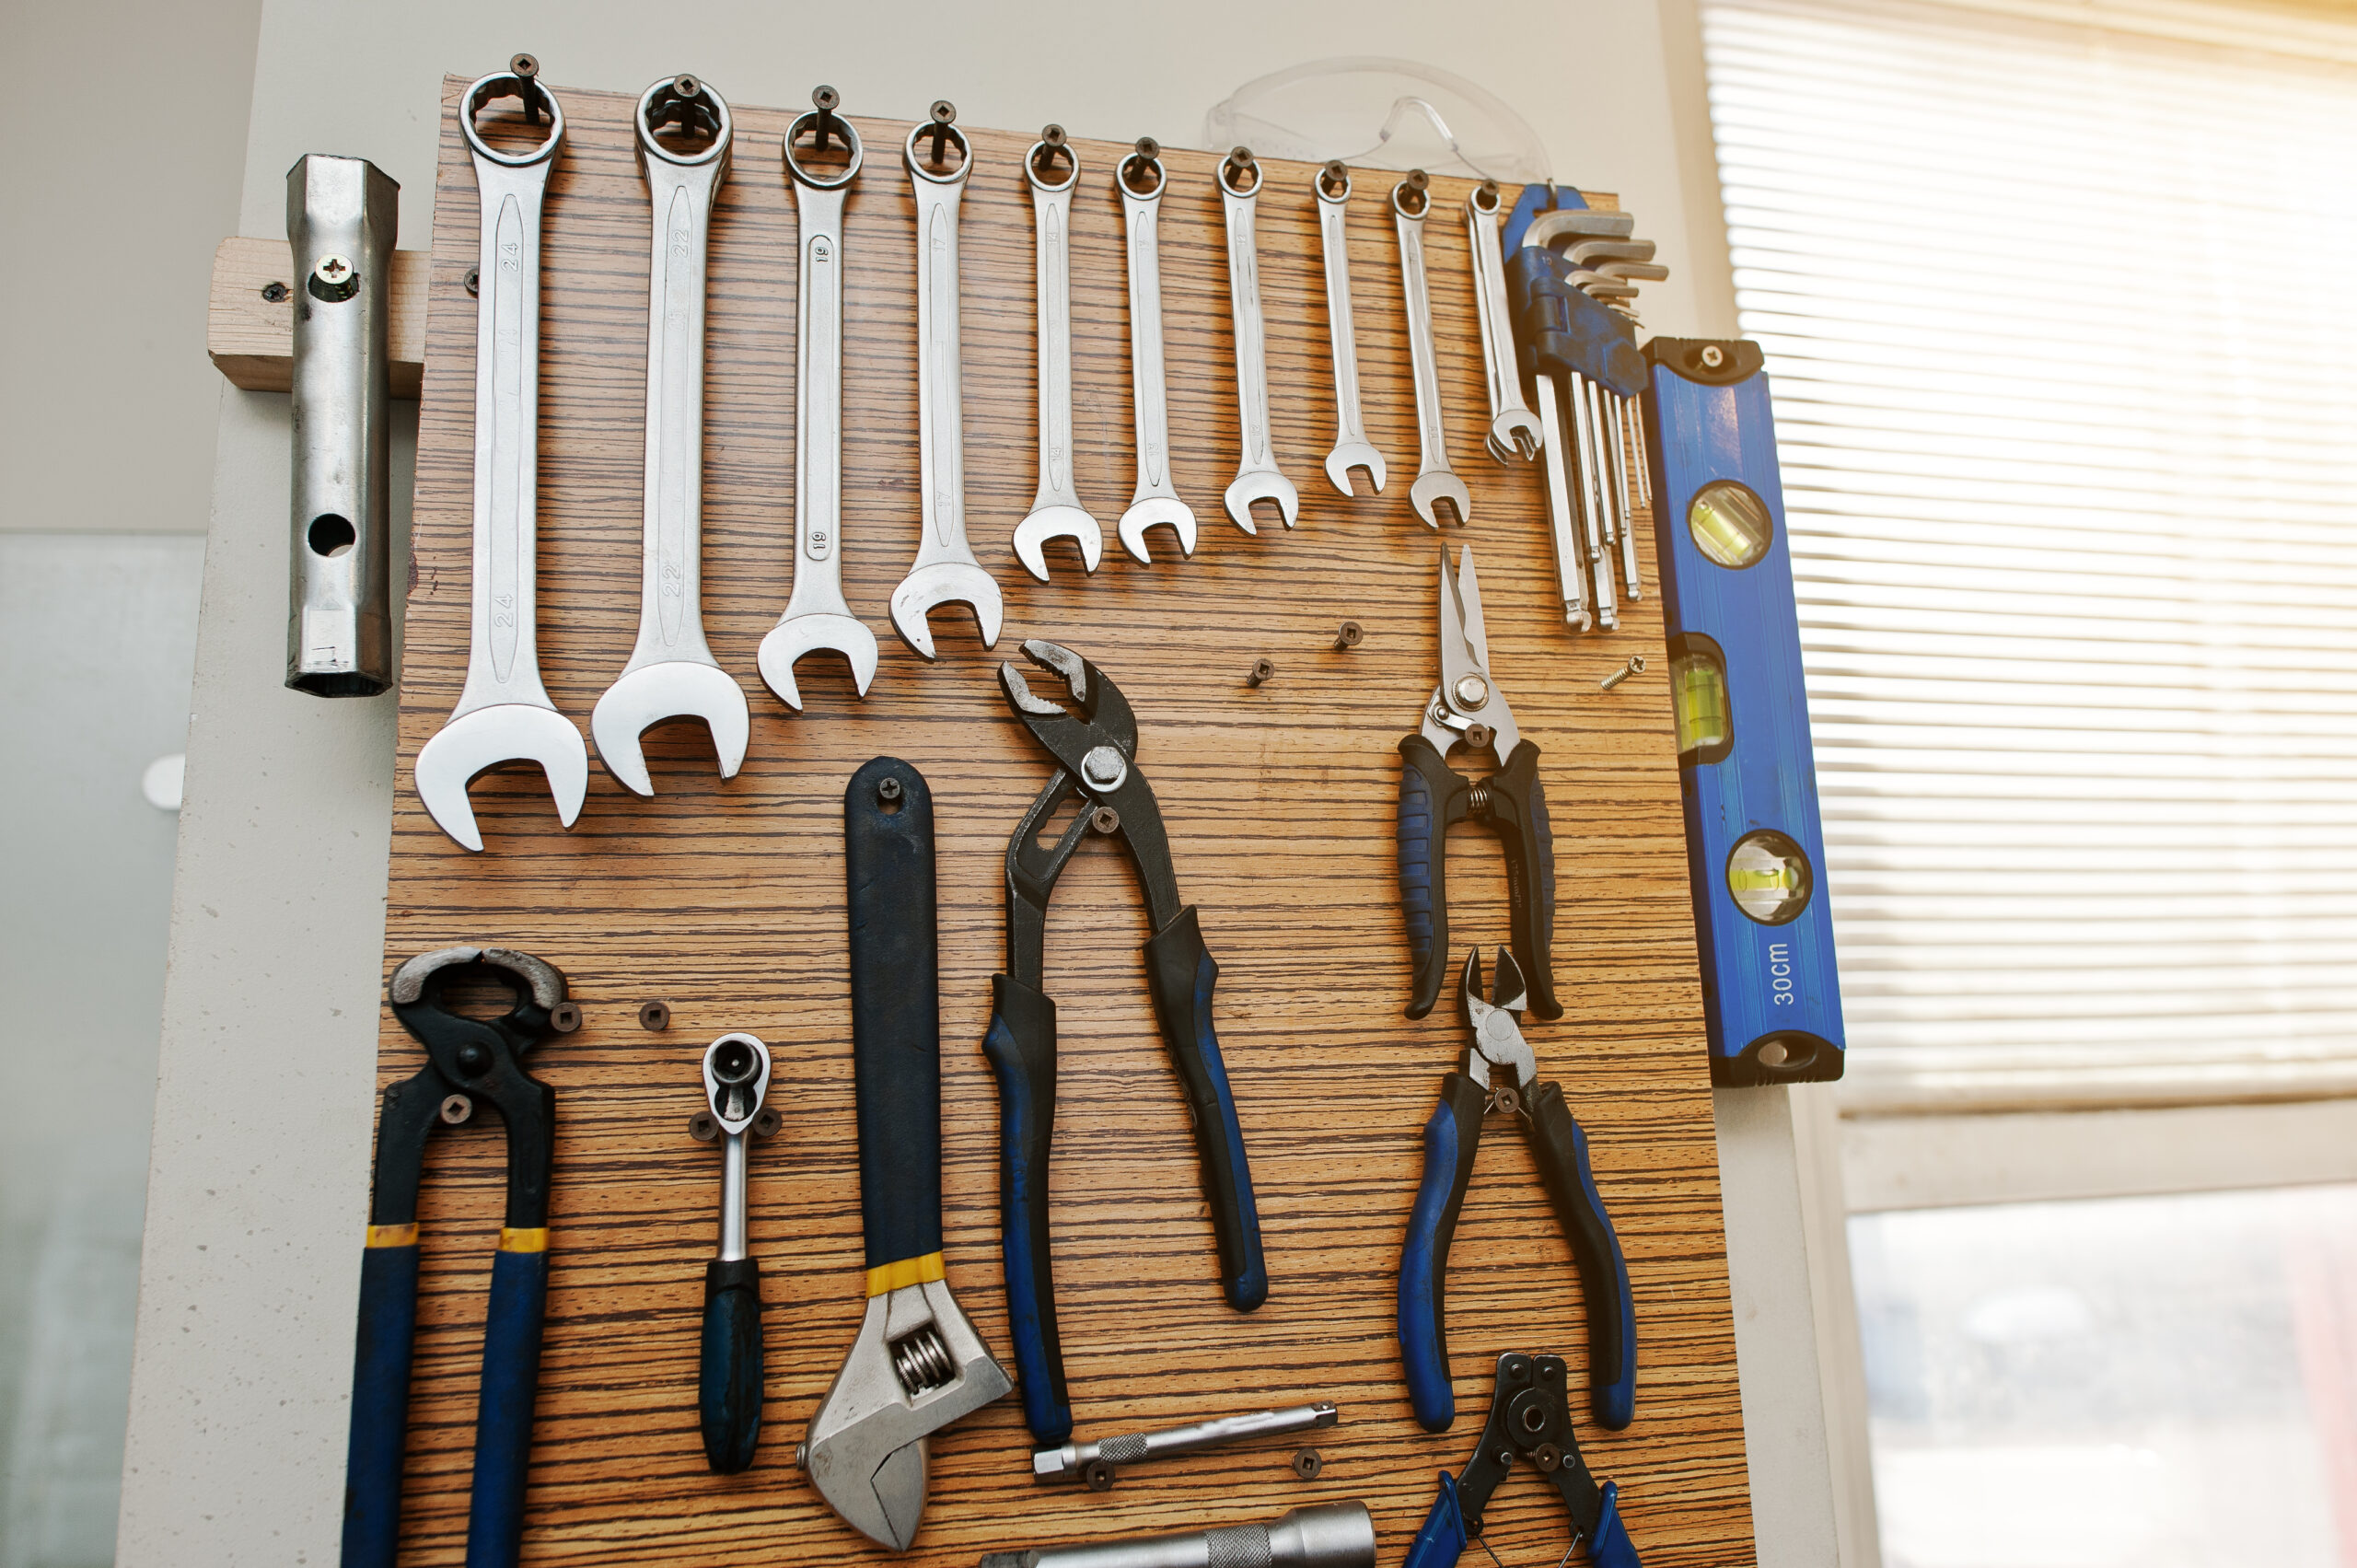 Group of used tools on wood deck, toolkit